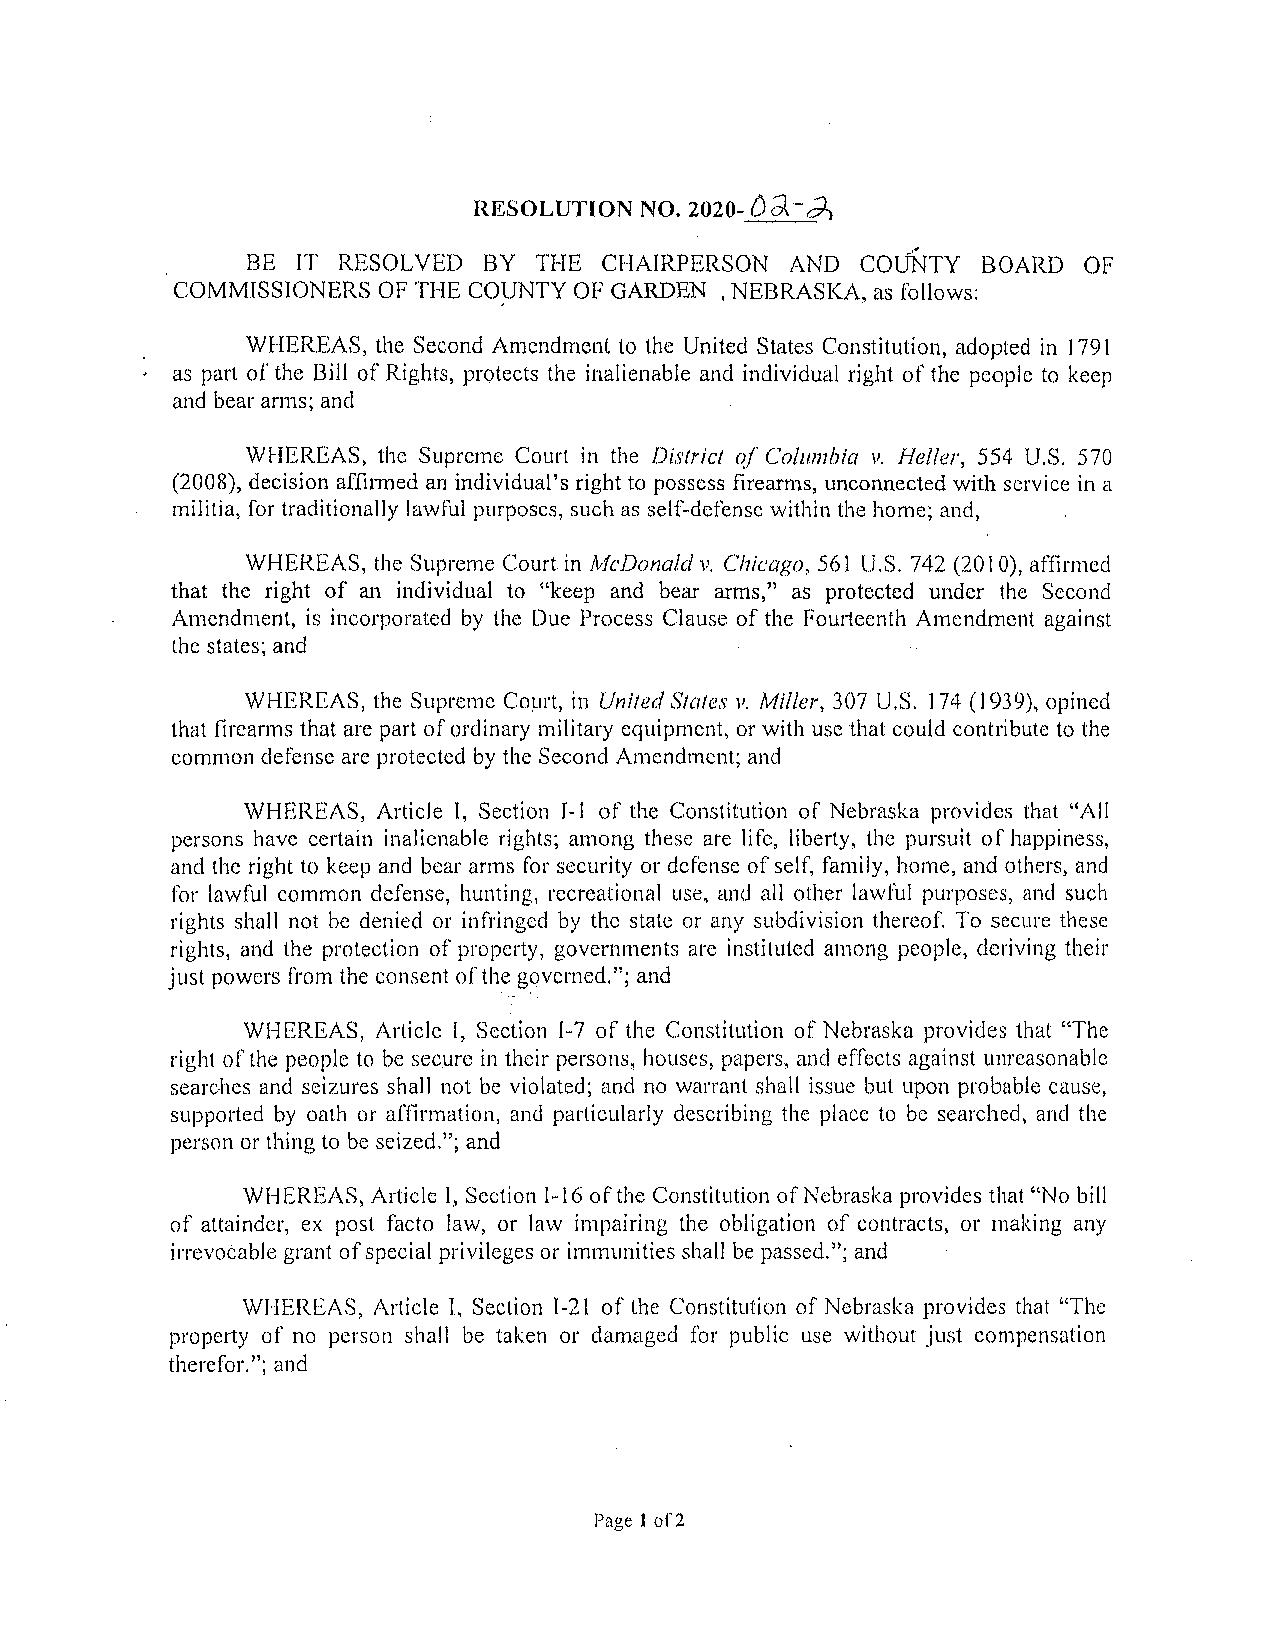 Garden County Nebraska Resolution page 1